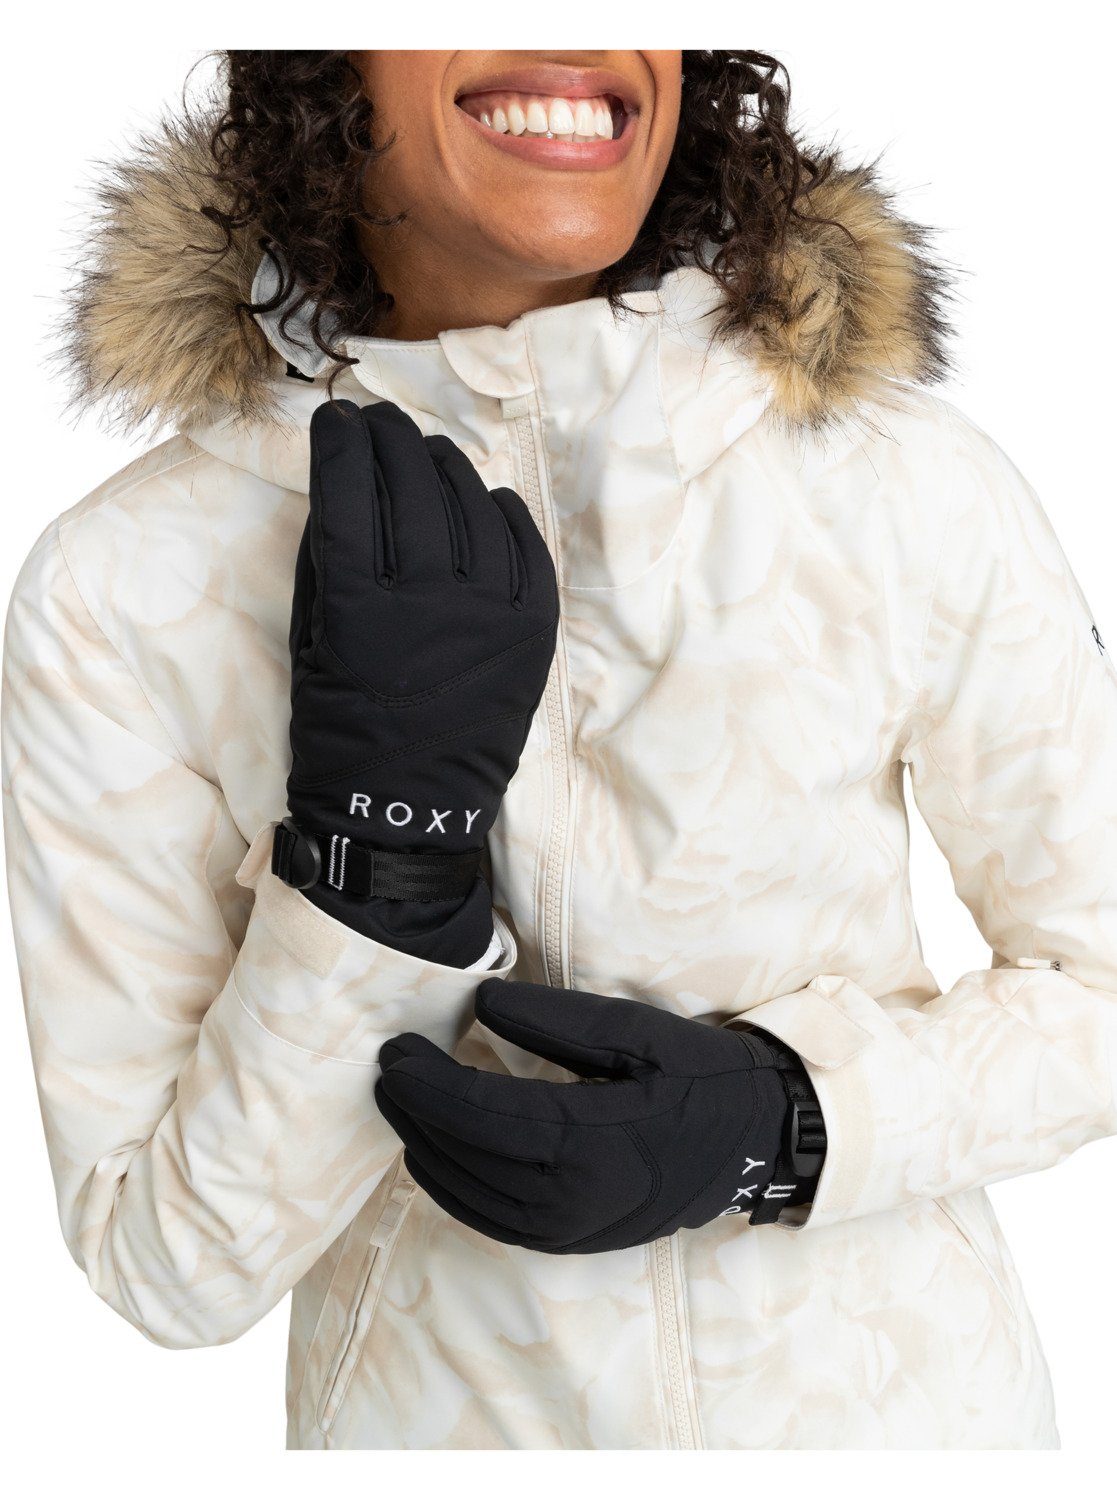 Jetty Snowboardhandschuhe Roxy Black ROXY True